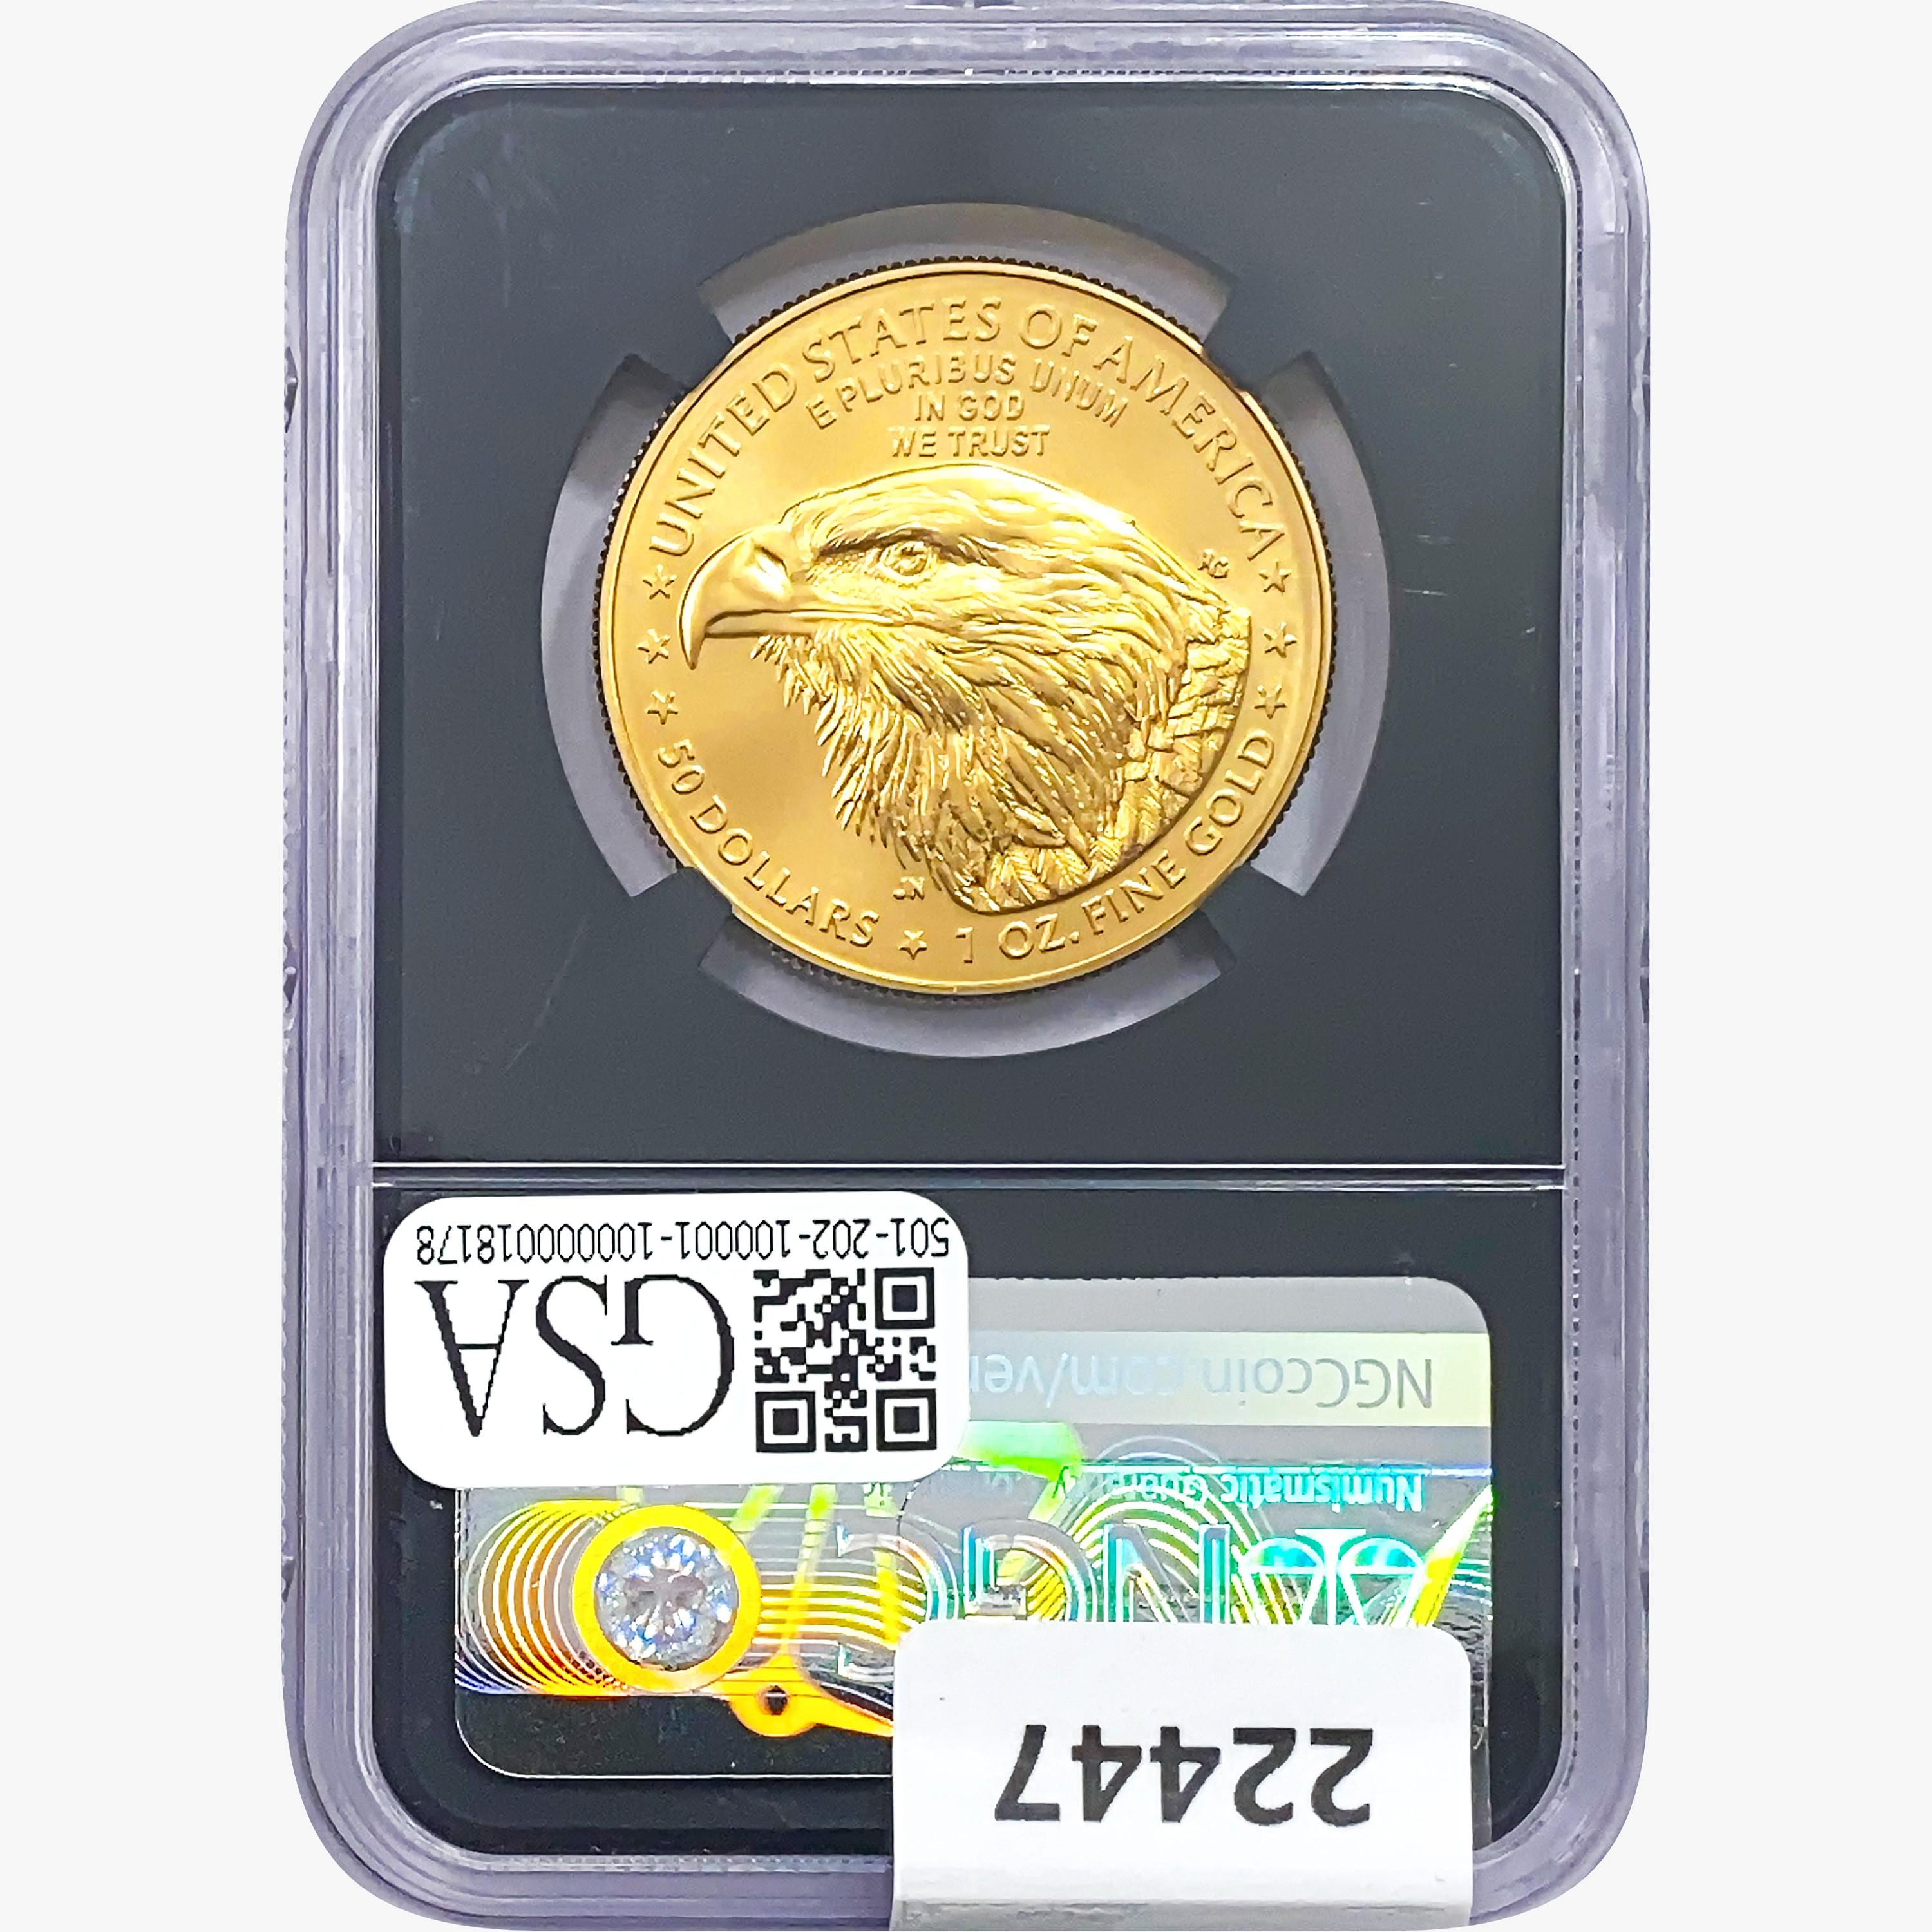 2022 $50 1oz. Gold Eagle NGC MS70 FDI